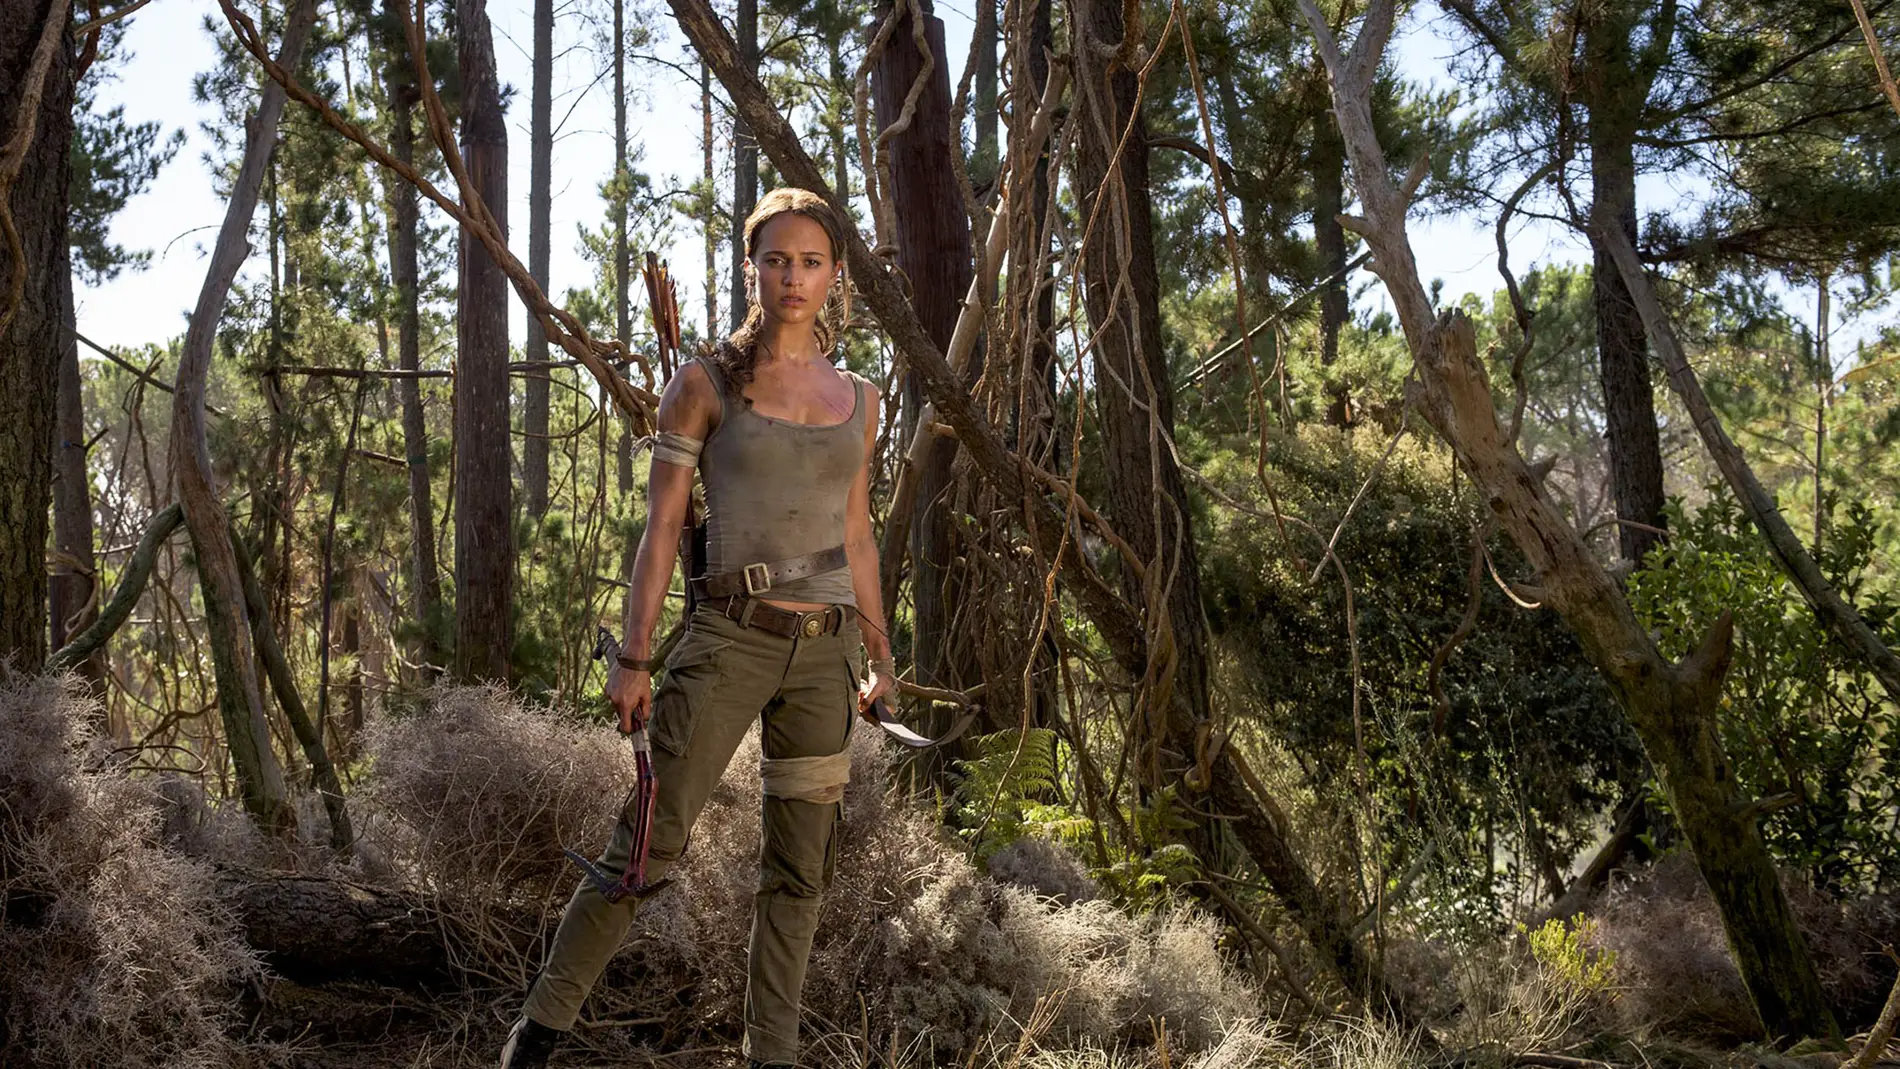 Alicia Vikander en 'Tomb Raider'